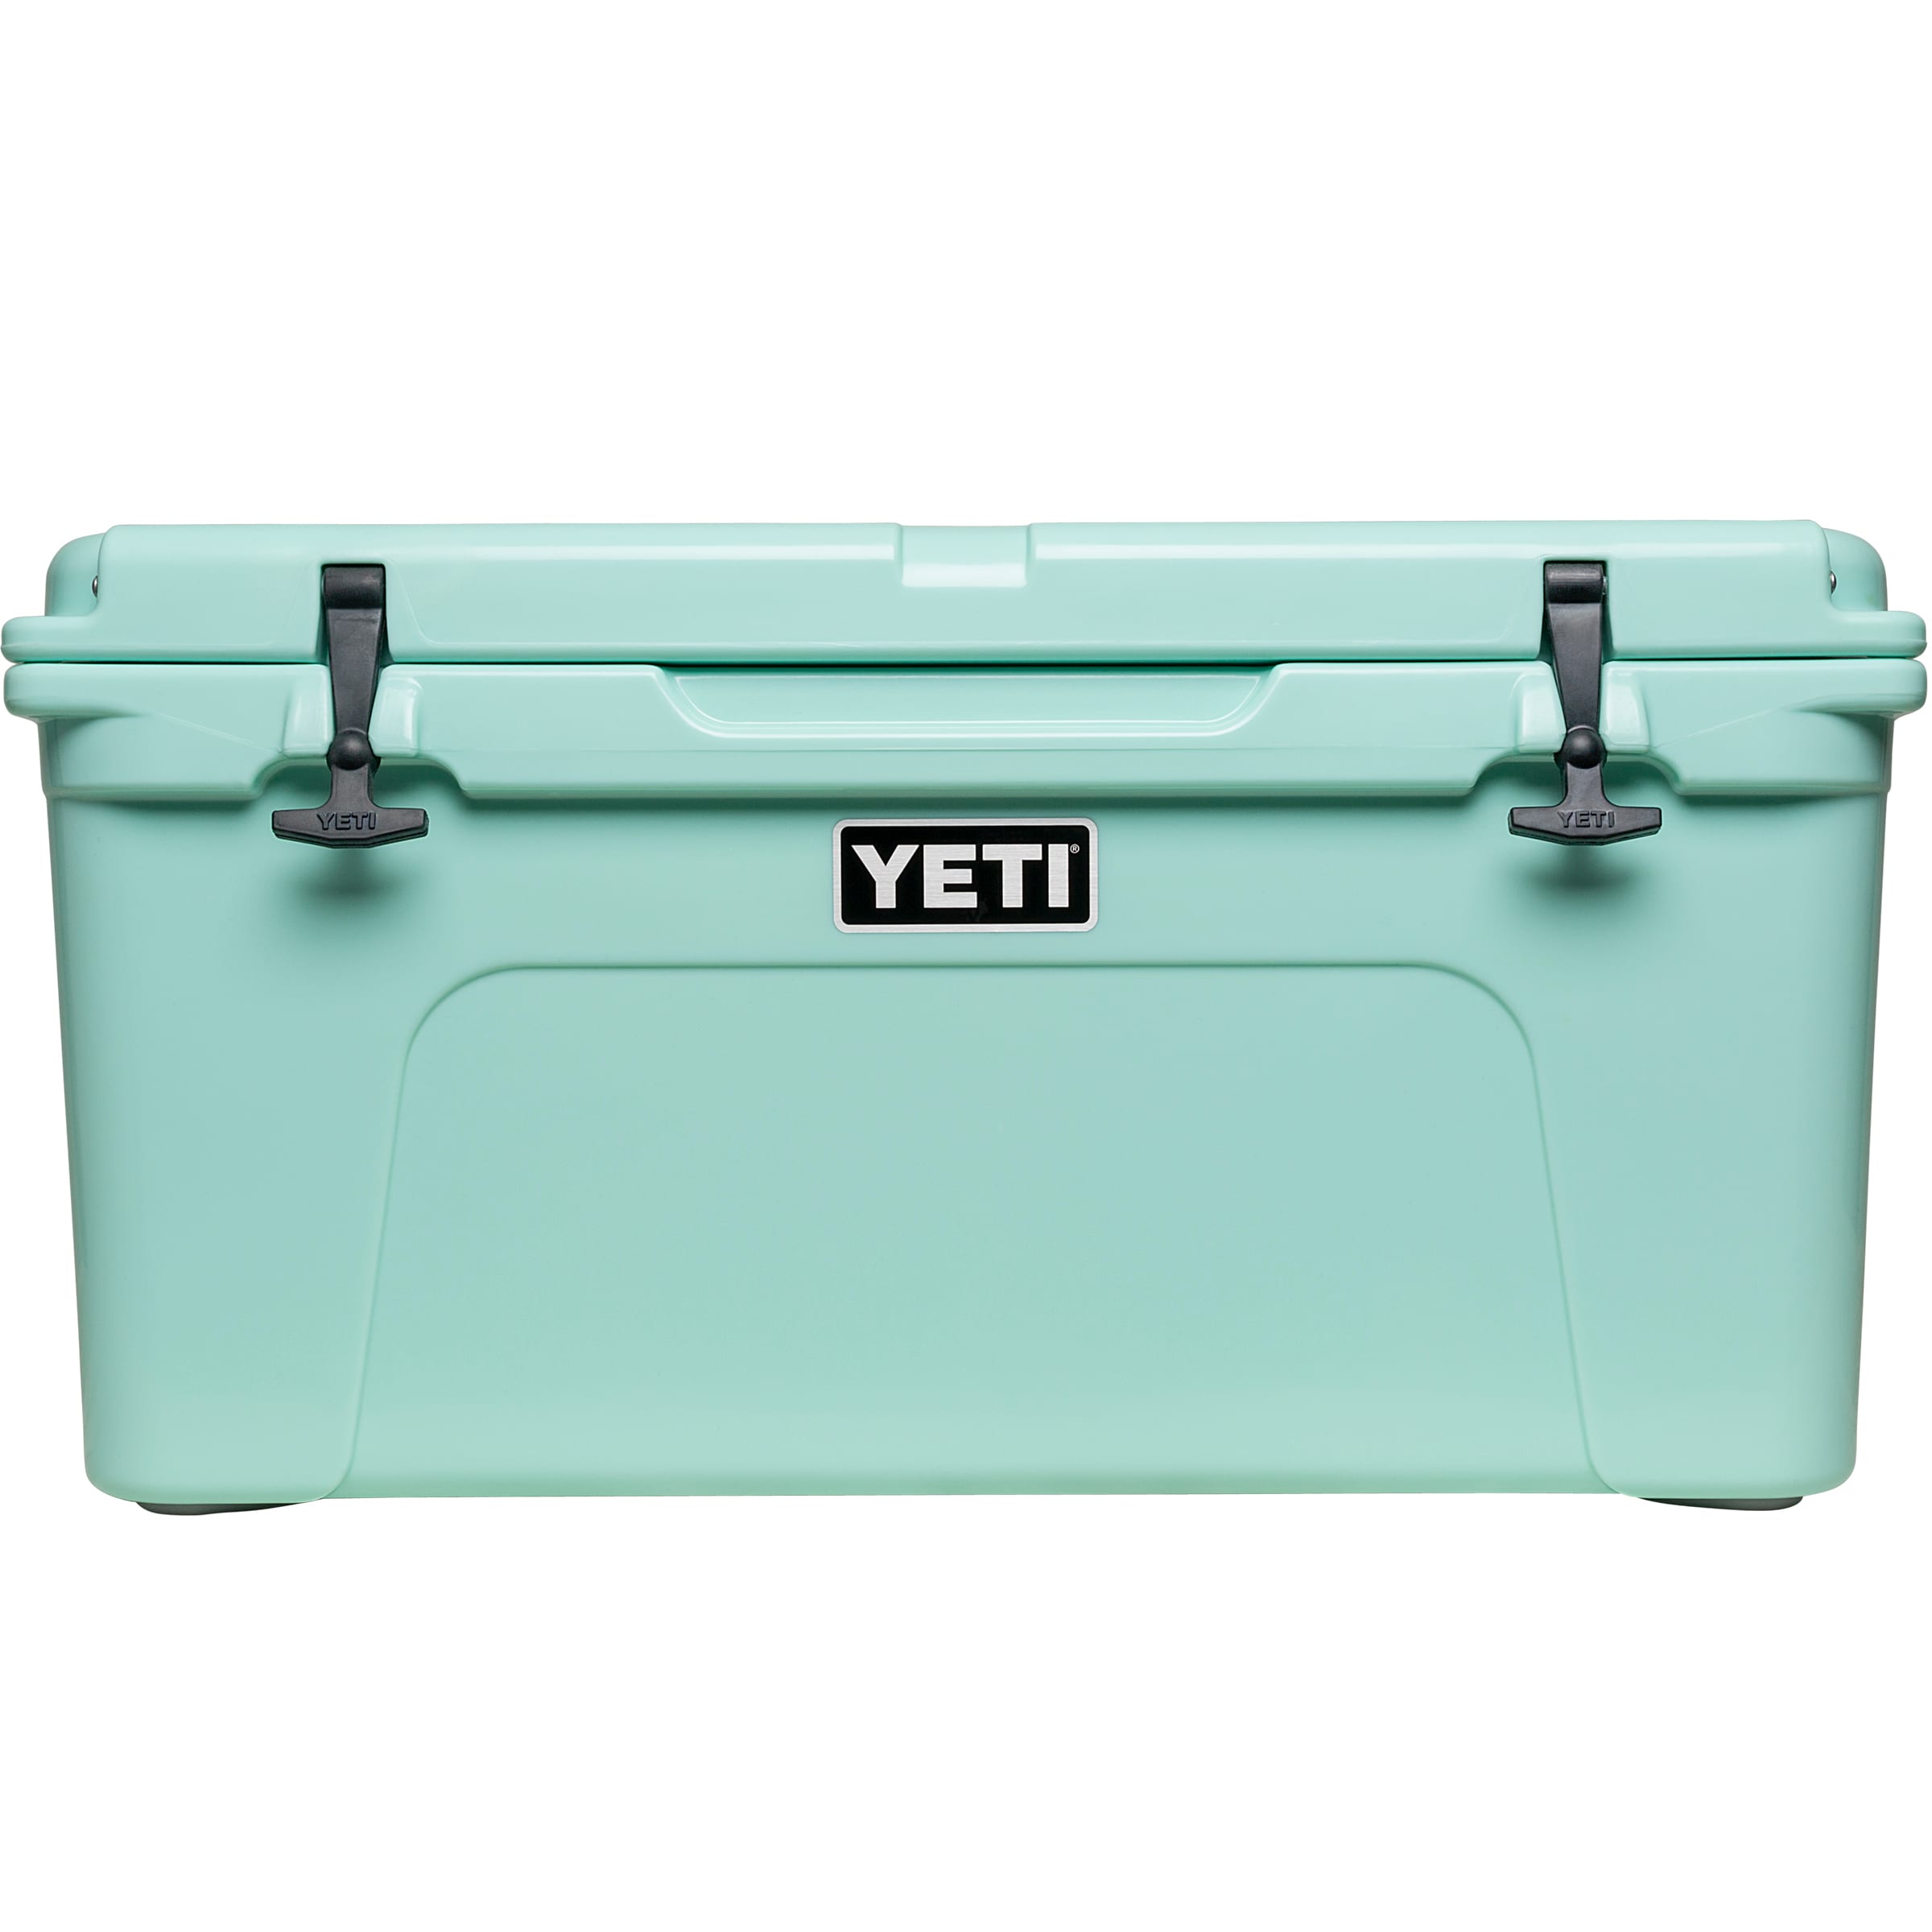 Yeti Tundra 65 52 Pounds Ice Box - Green (10065290000) for sale